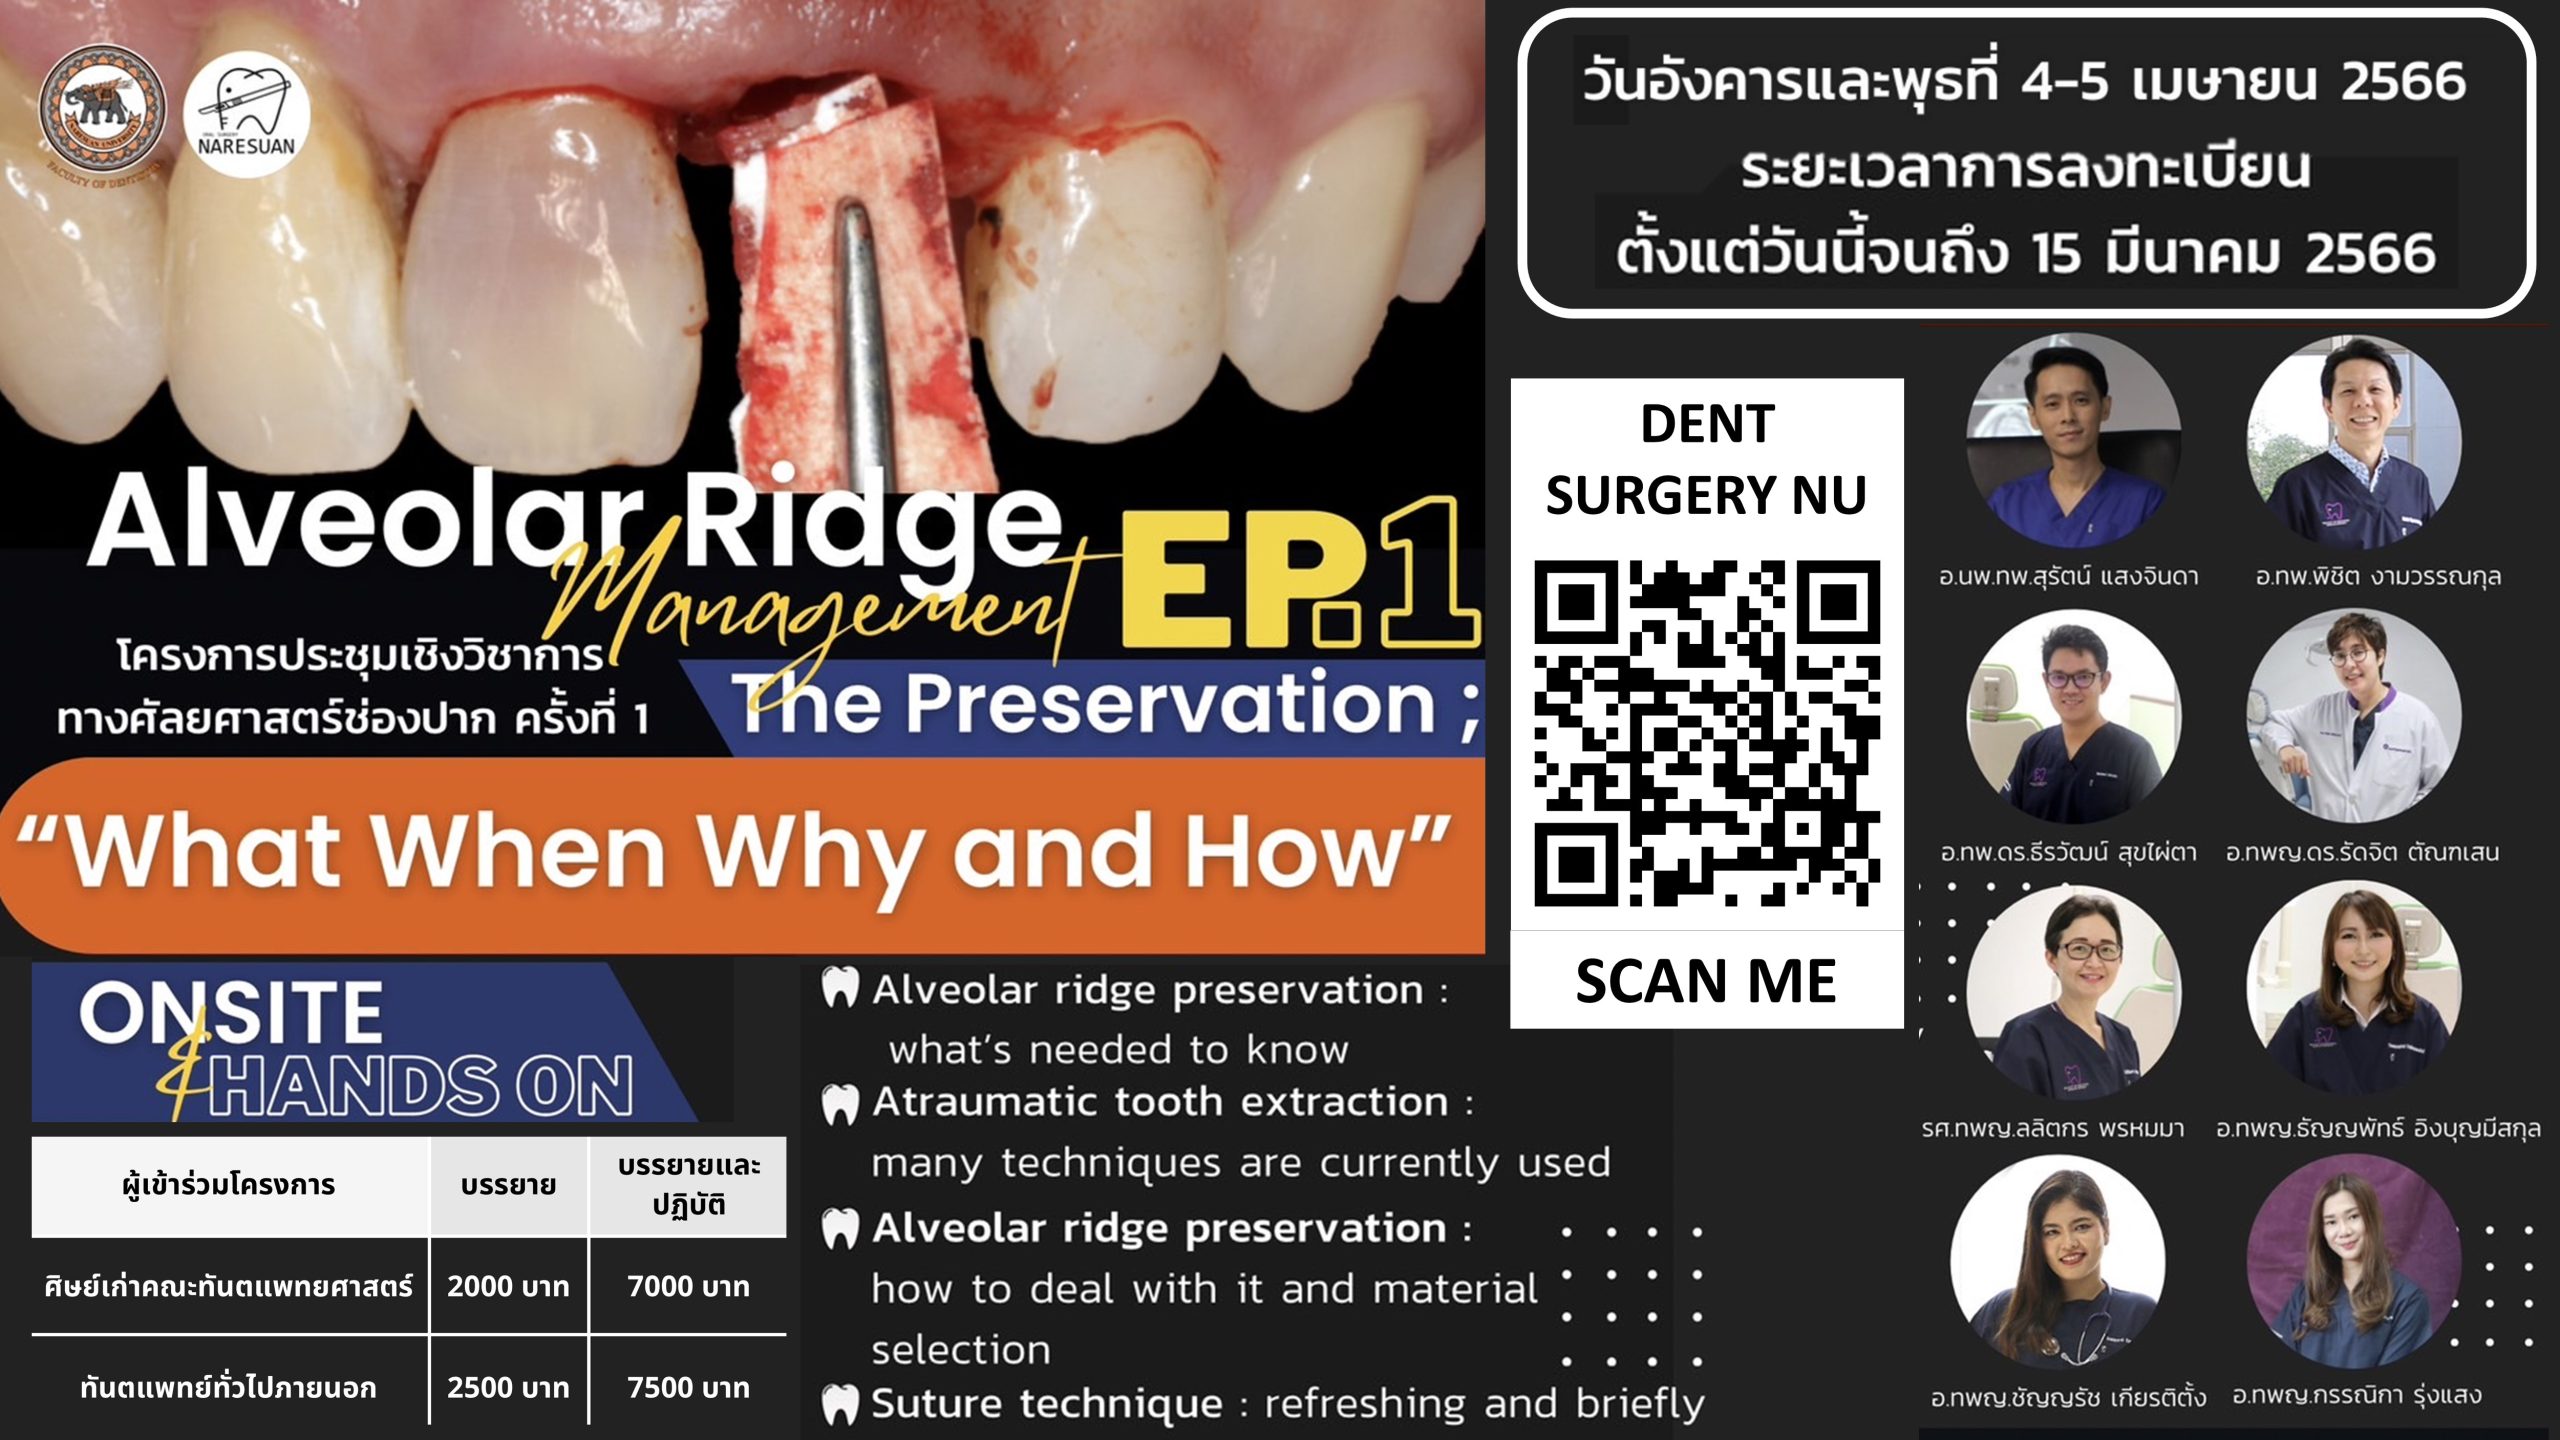 En-โครงการประชุมเชิงวิชาการทางศัลยศาสตร์ช่องปาก ครั้งที่ 1 เรื่อง “Alveolar Ridge Management: Ep.1 The Preservation; What When Why and How”